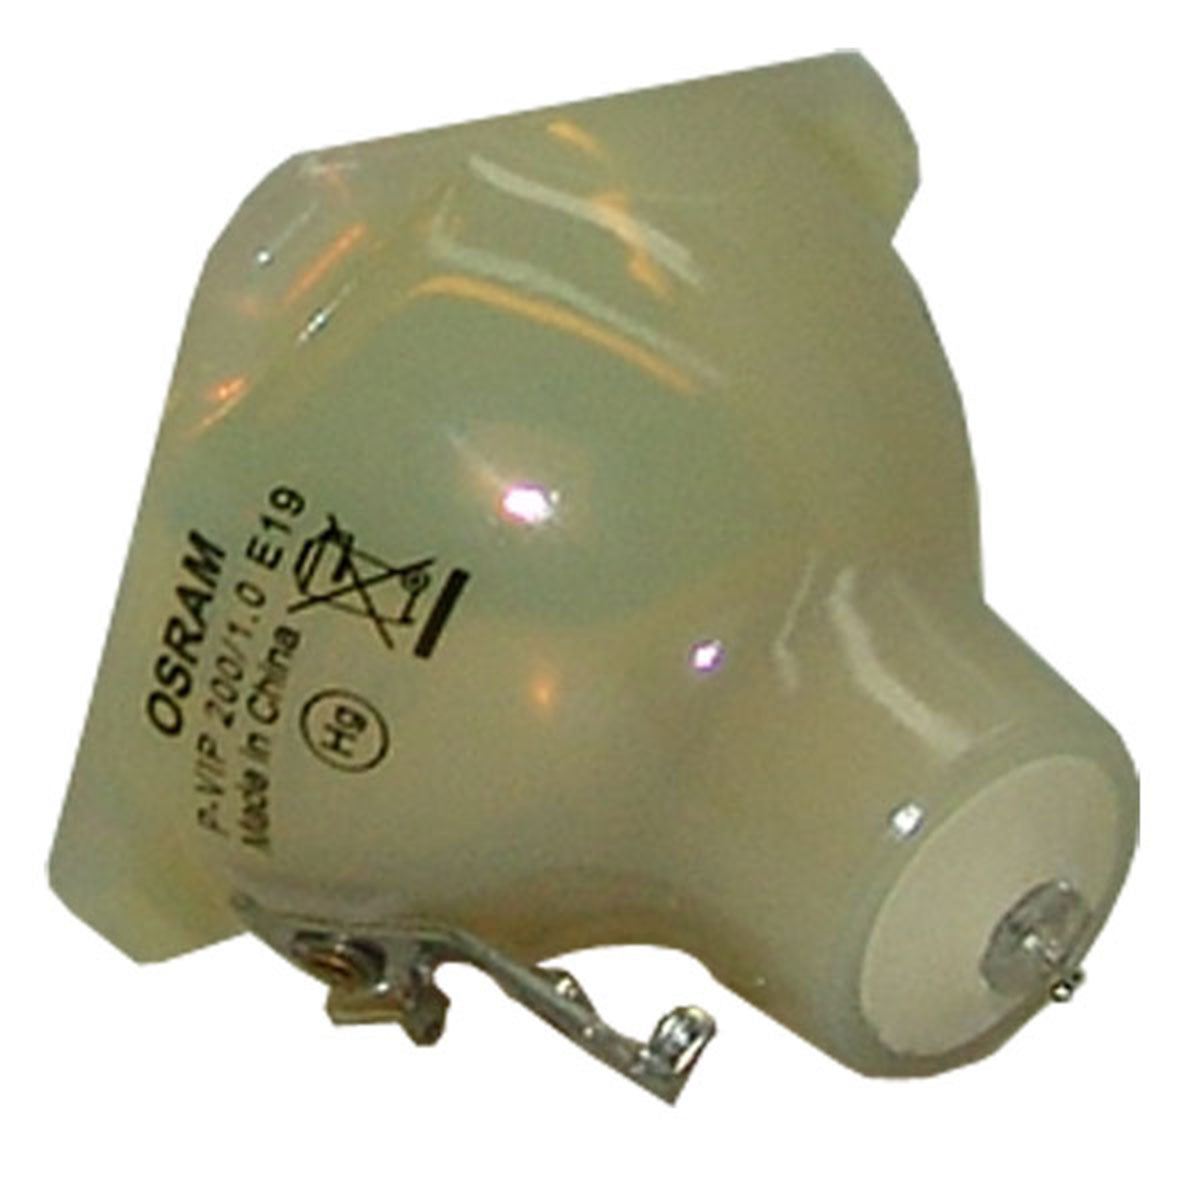 Geha 60-201616 Osram Projector Bare Lamp